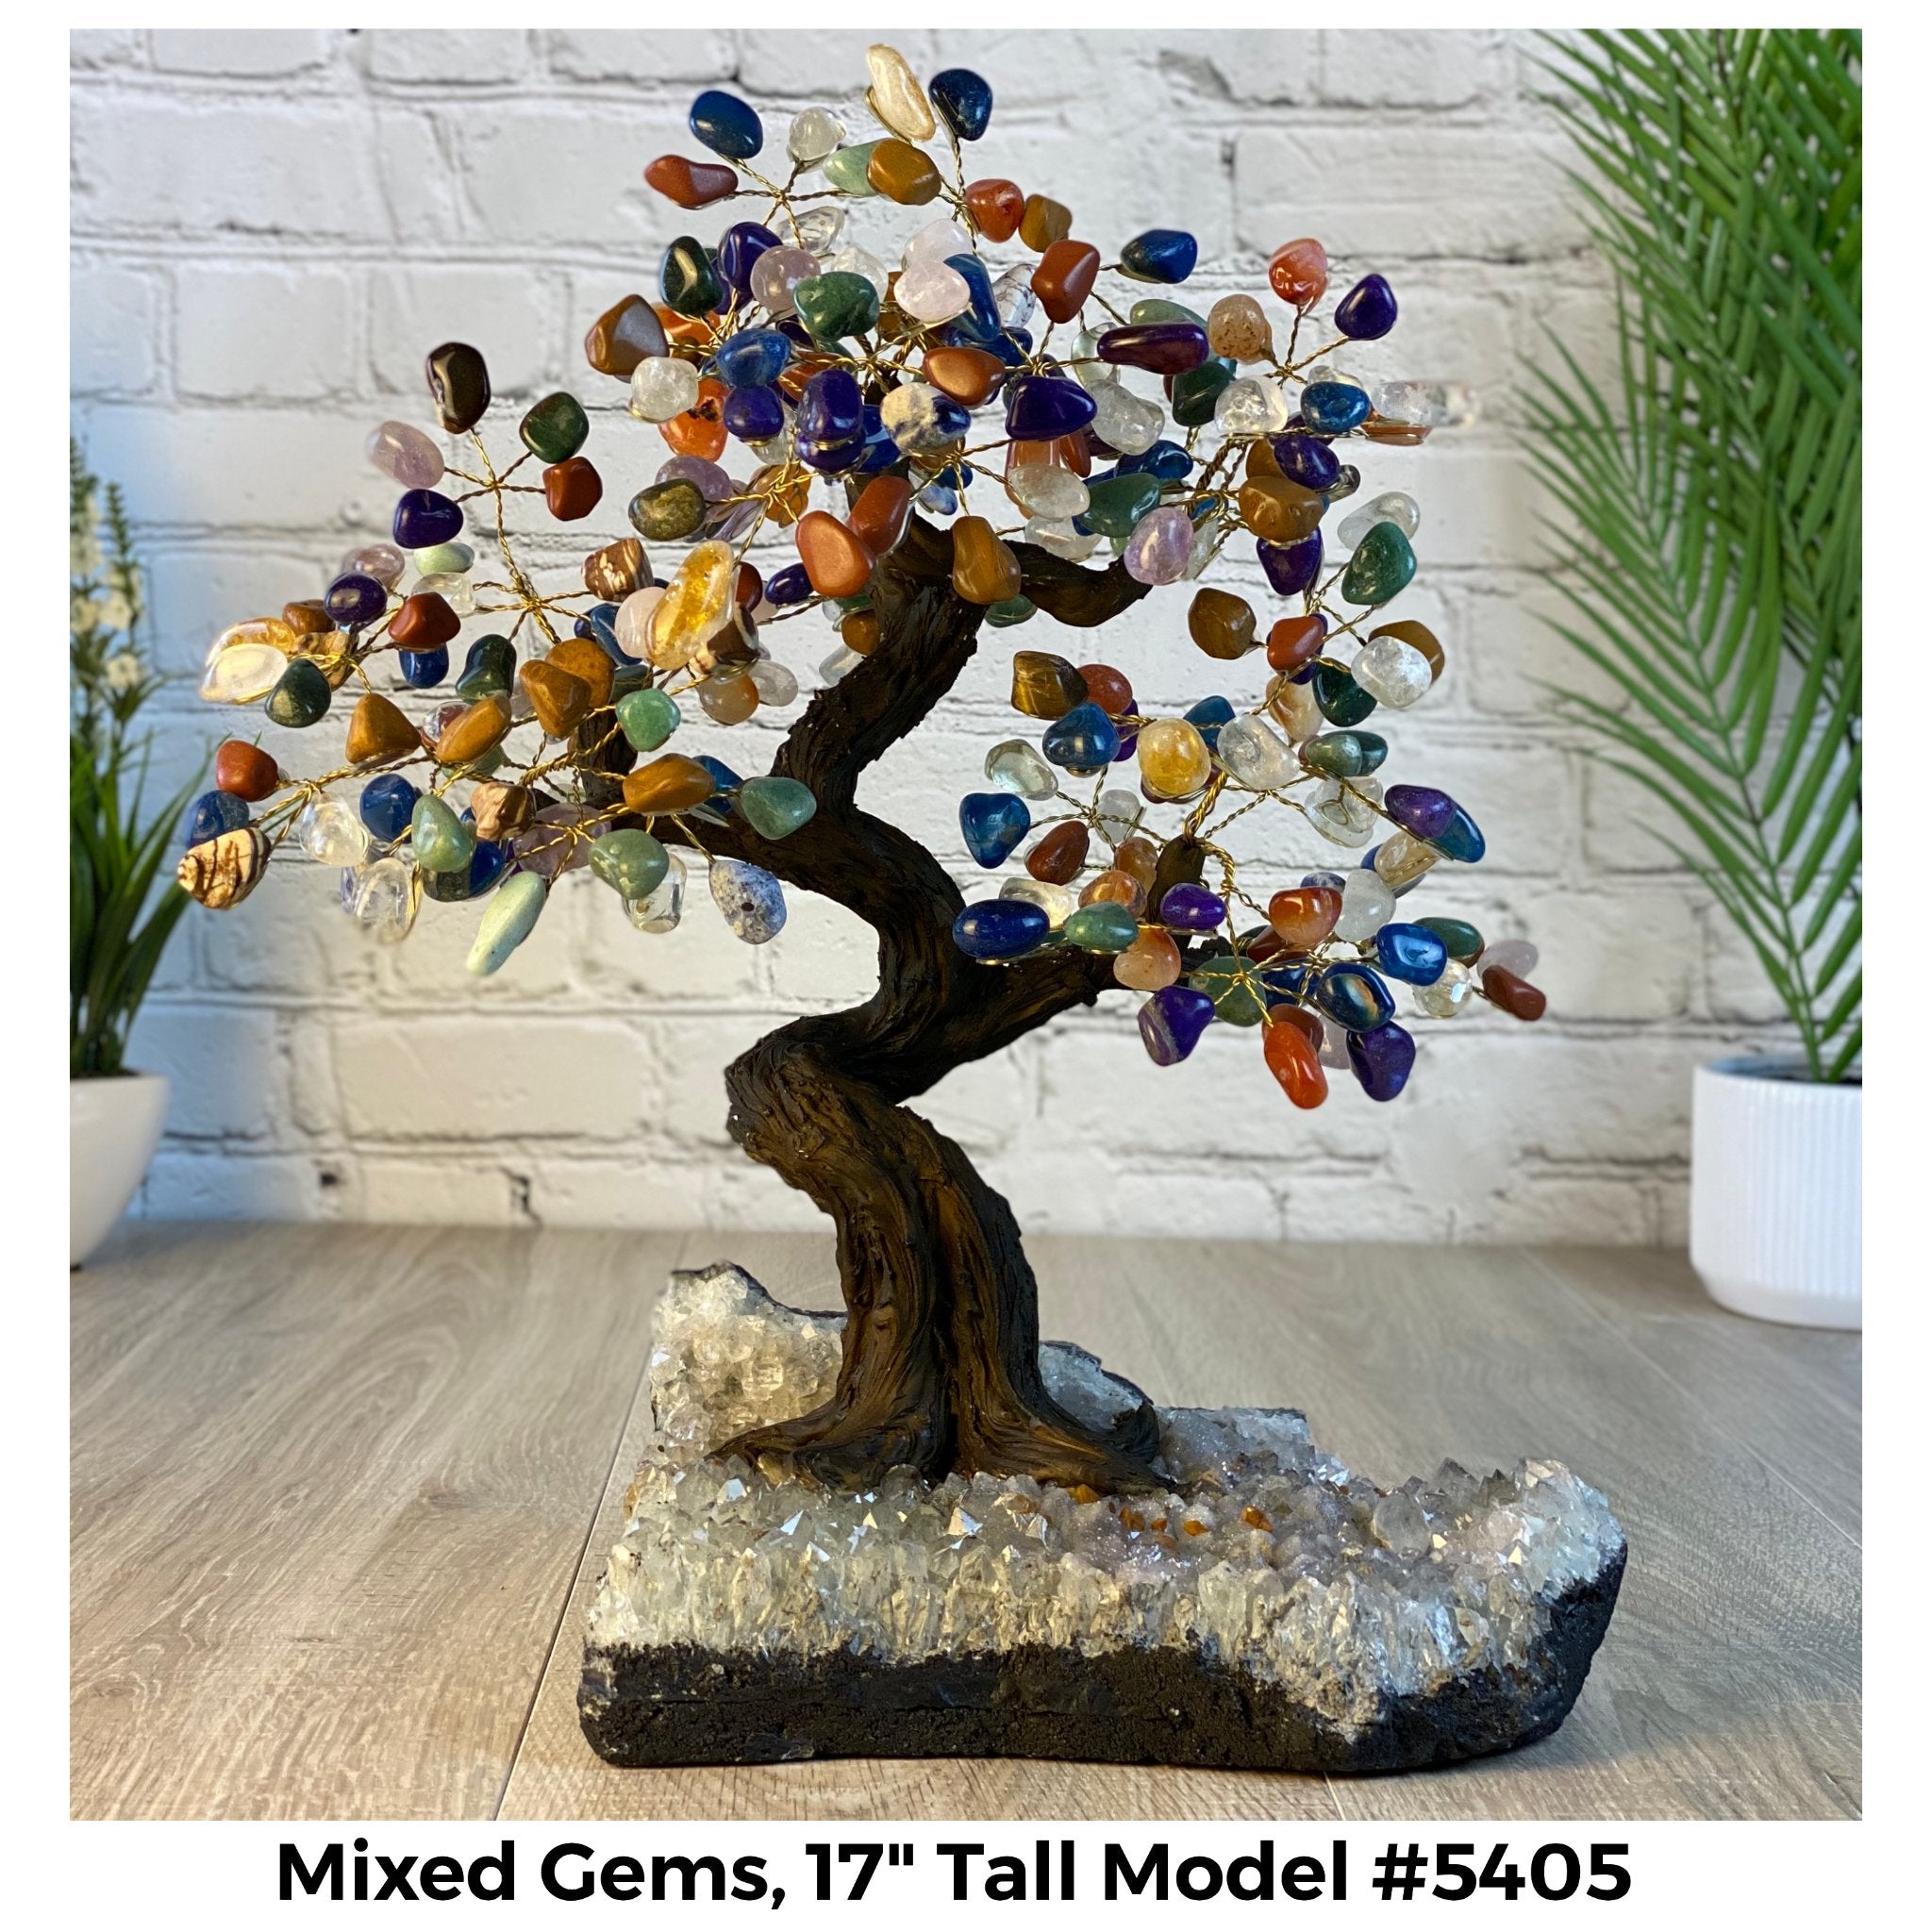 Mixed Gems 17" Tall Handmade Gemstone Tree on a Crystal base, 240 Gems #5405MIXD - Brazil GemsBrazil GemsMixed Gems 17" Tall Handmade Gemstone Tree on a Crystal base, 240 Gems #5405MIXDGemstone Trees5405MIXD